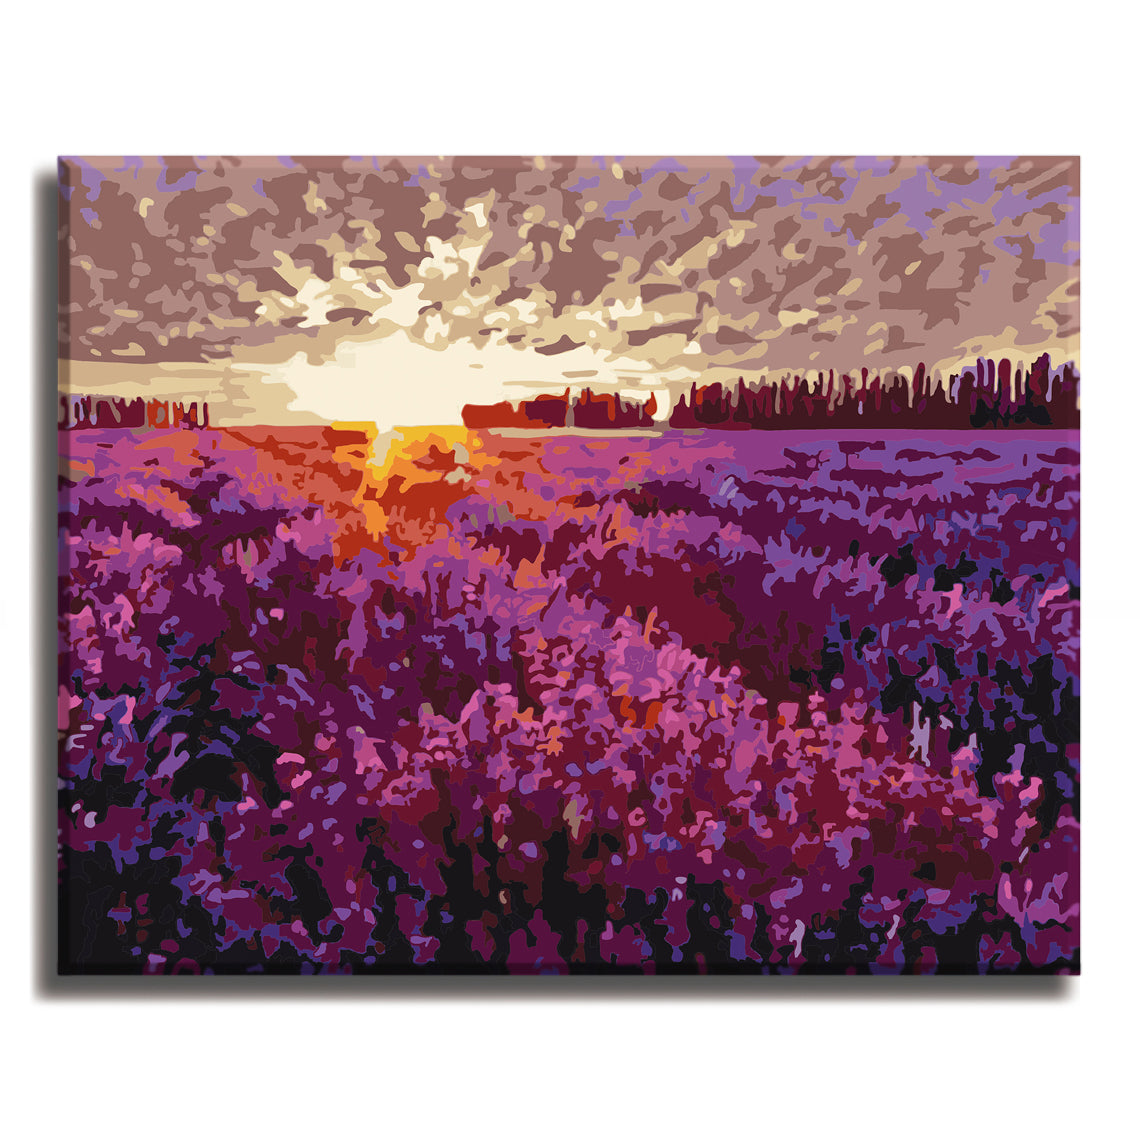 Adbrain Flowery Fields, Set of 4 Paint-by-Number Kit